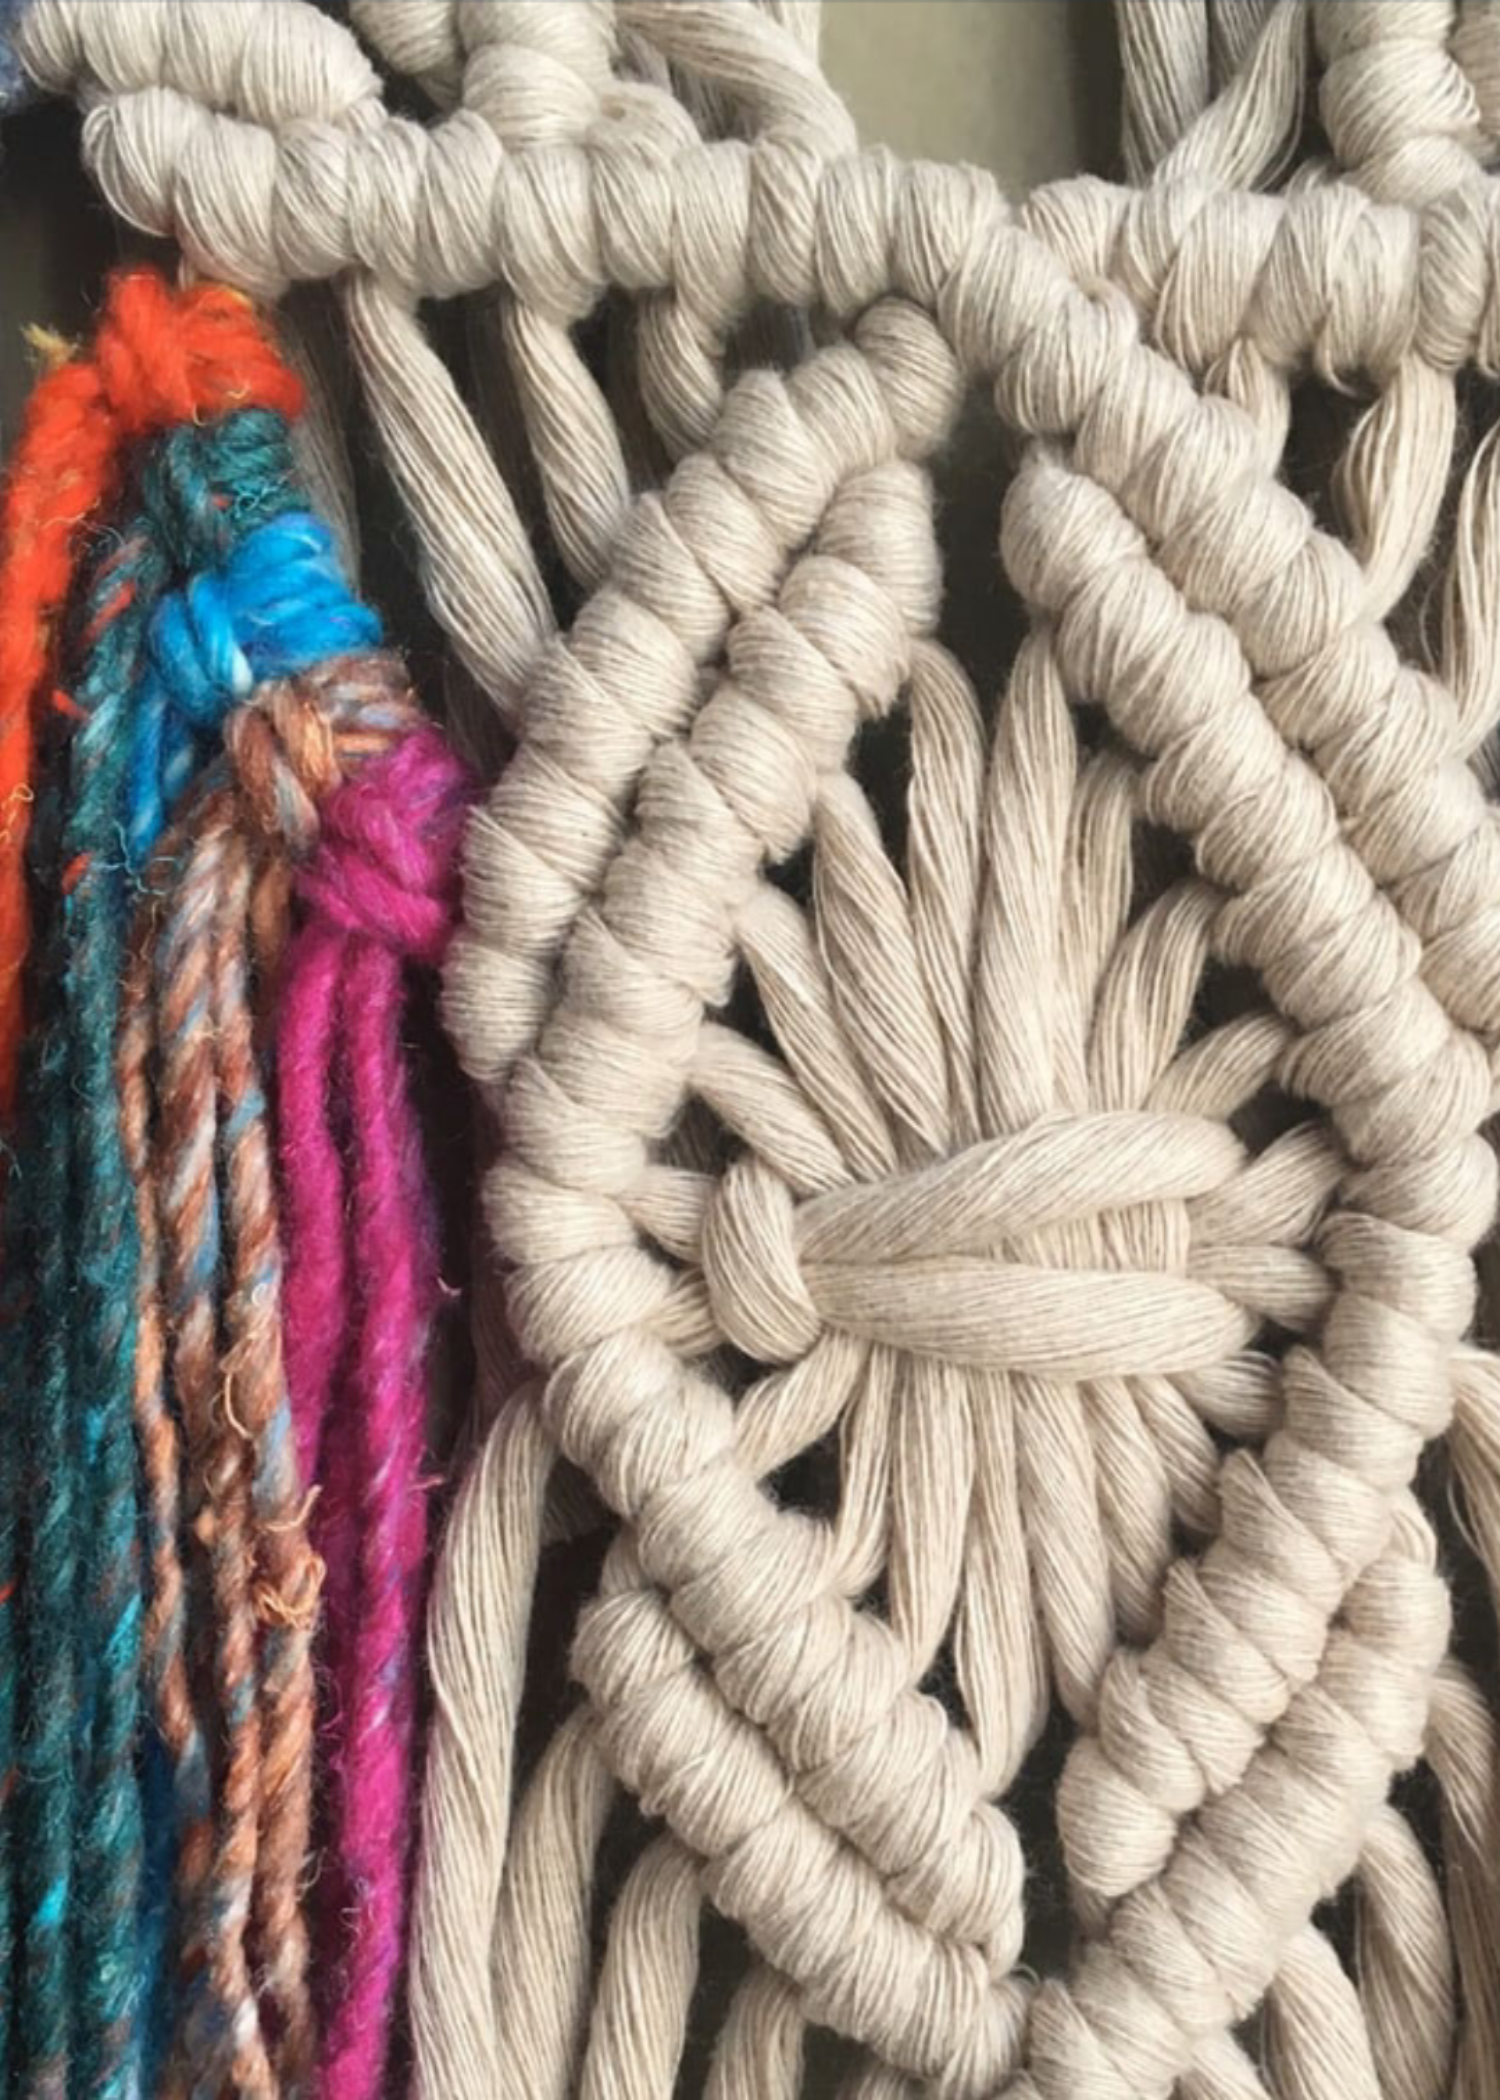 Macramé knot detail